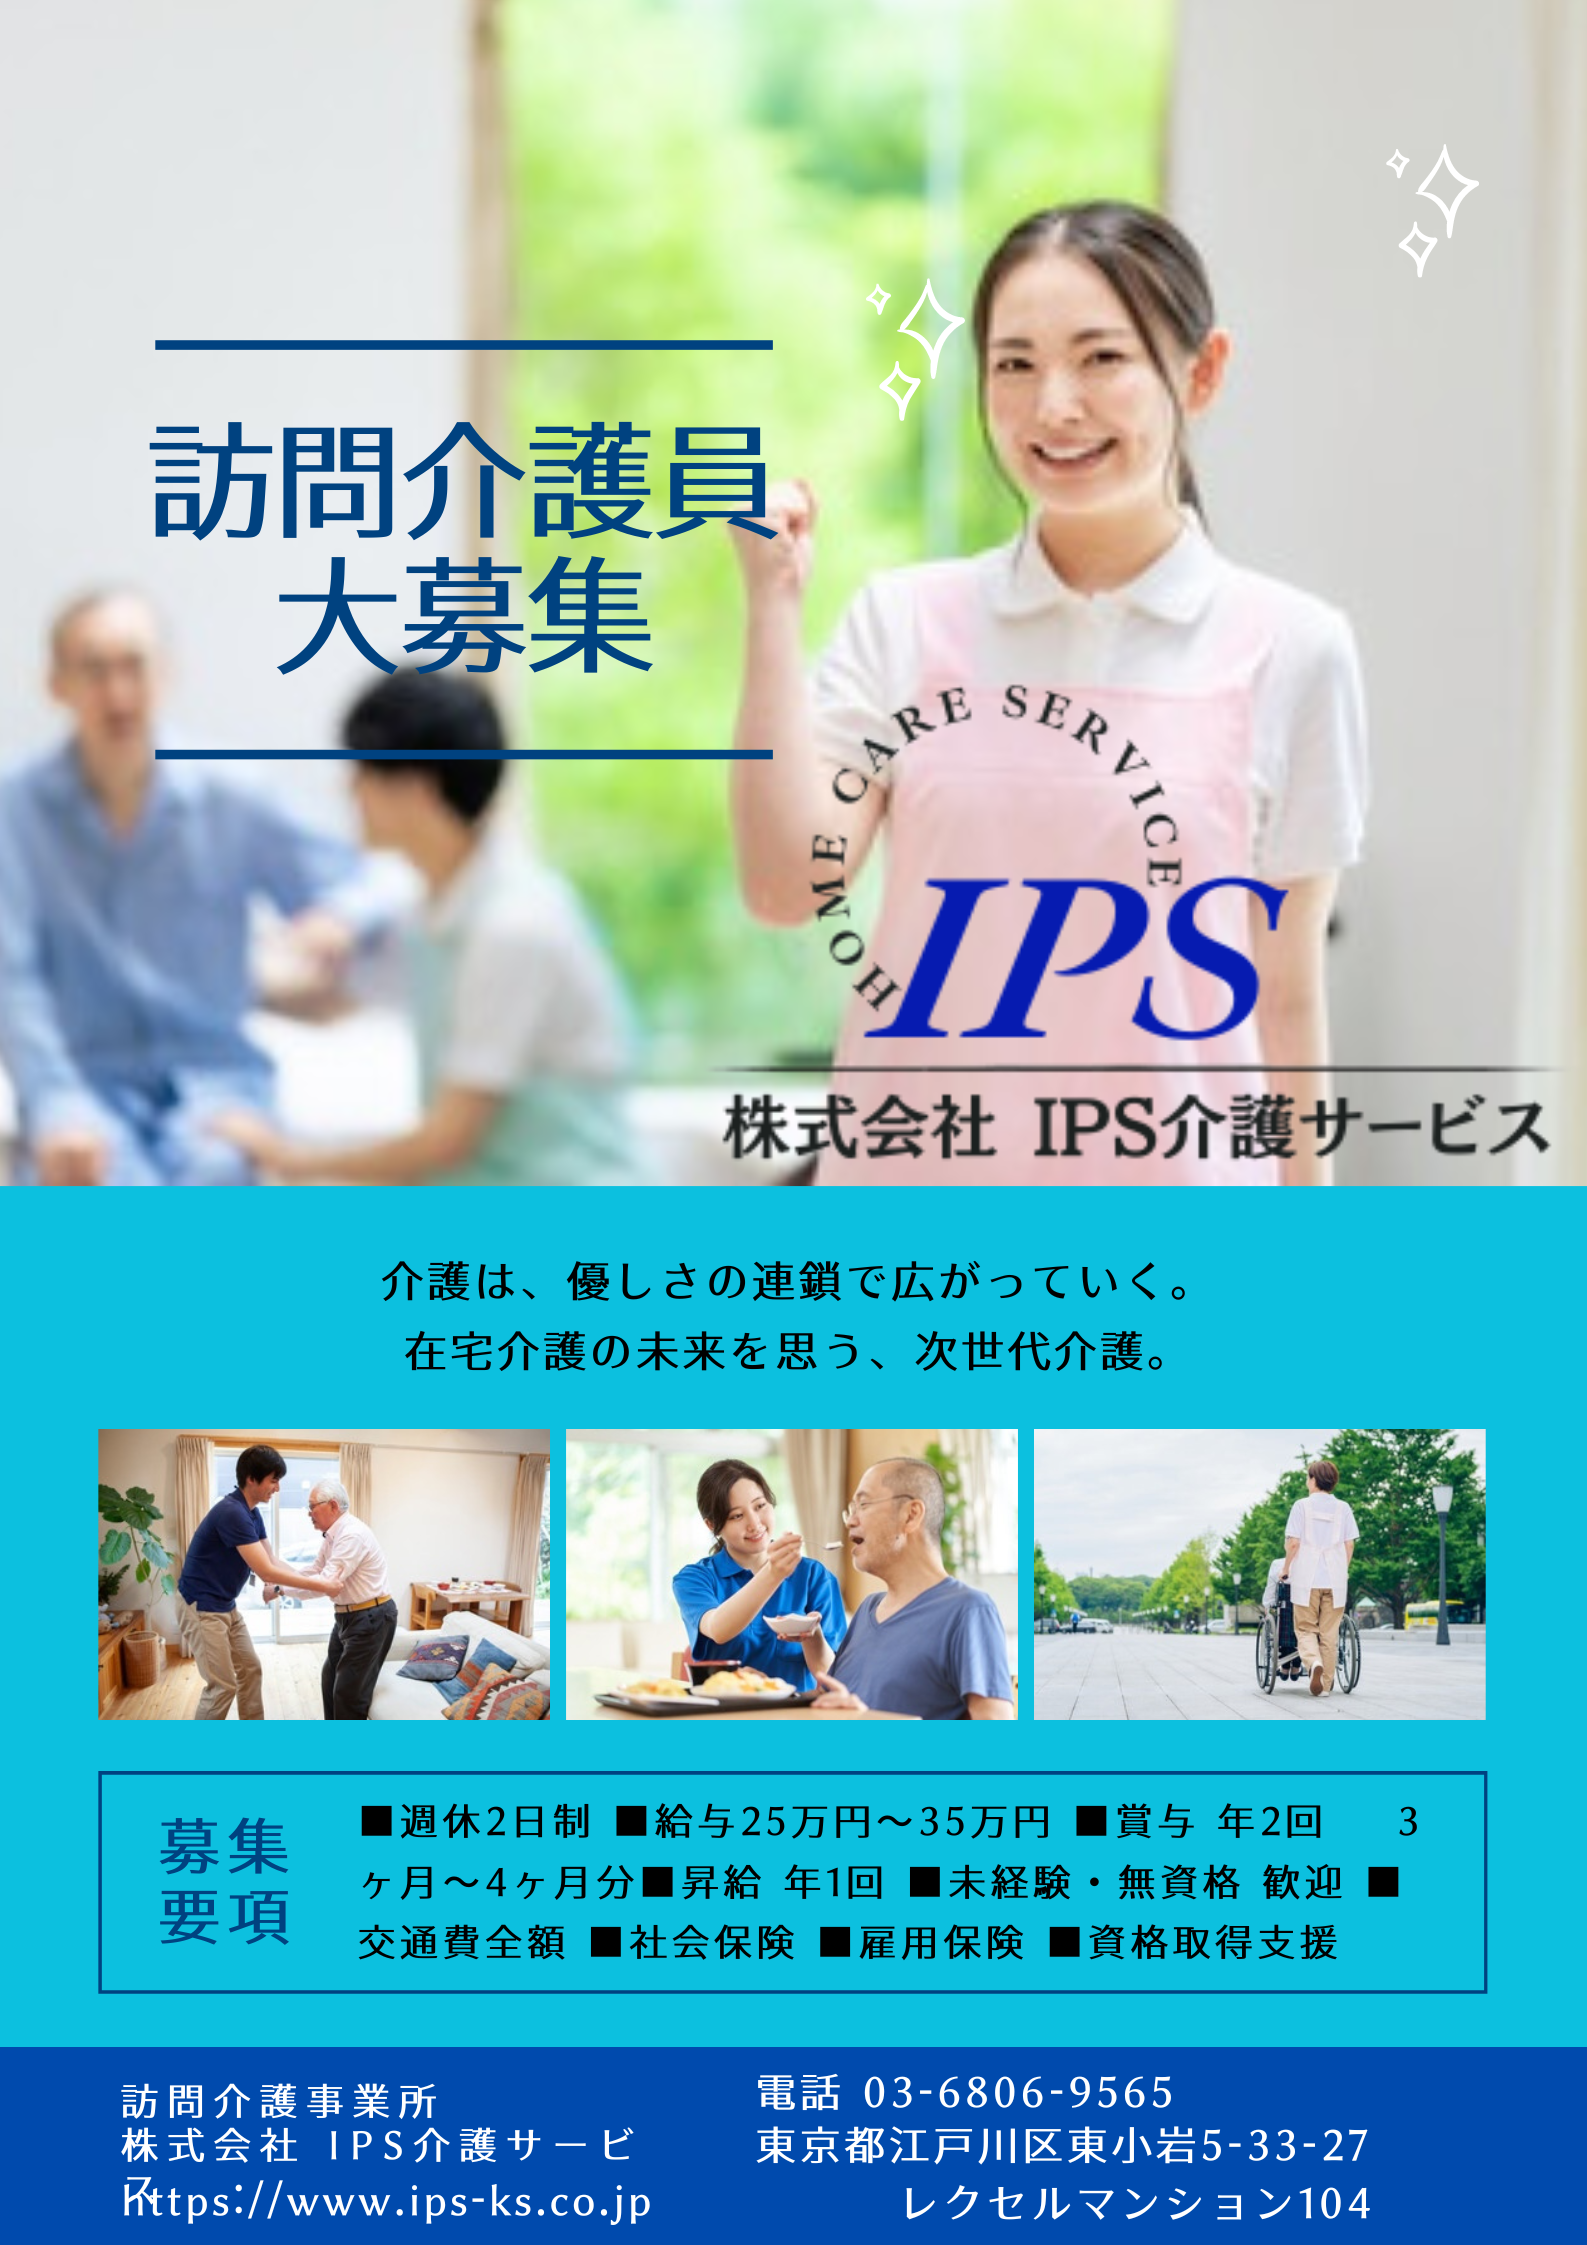 IPS介護サービスでは、訪問介護員を大募集。居宅介護・重度訪問介護など障害福祉サービス特化型の訪問介護事業所です。